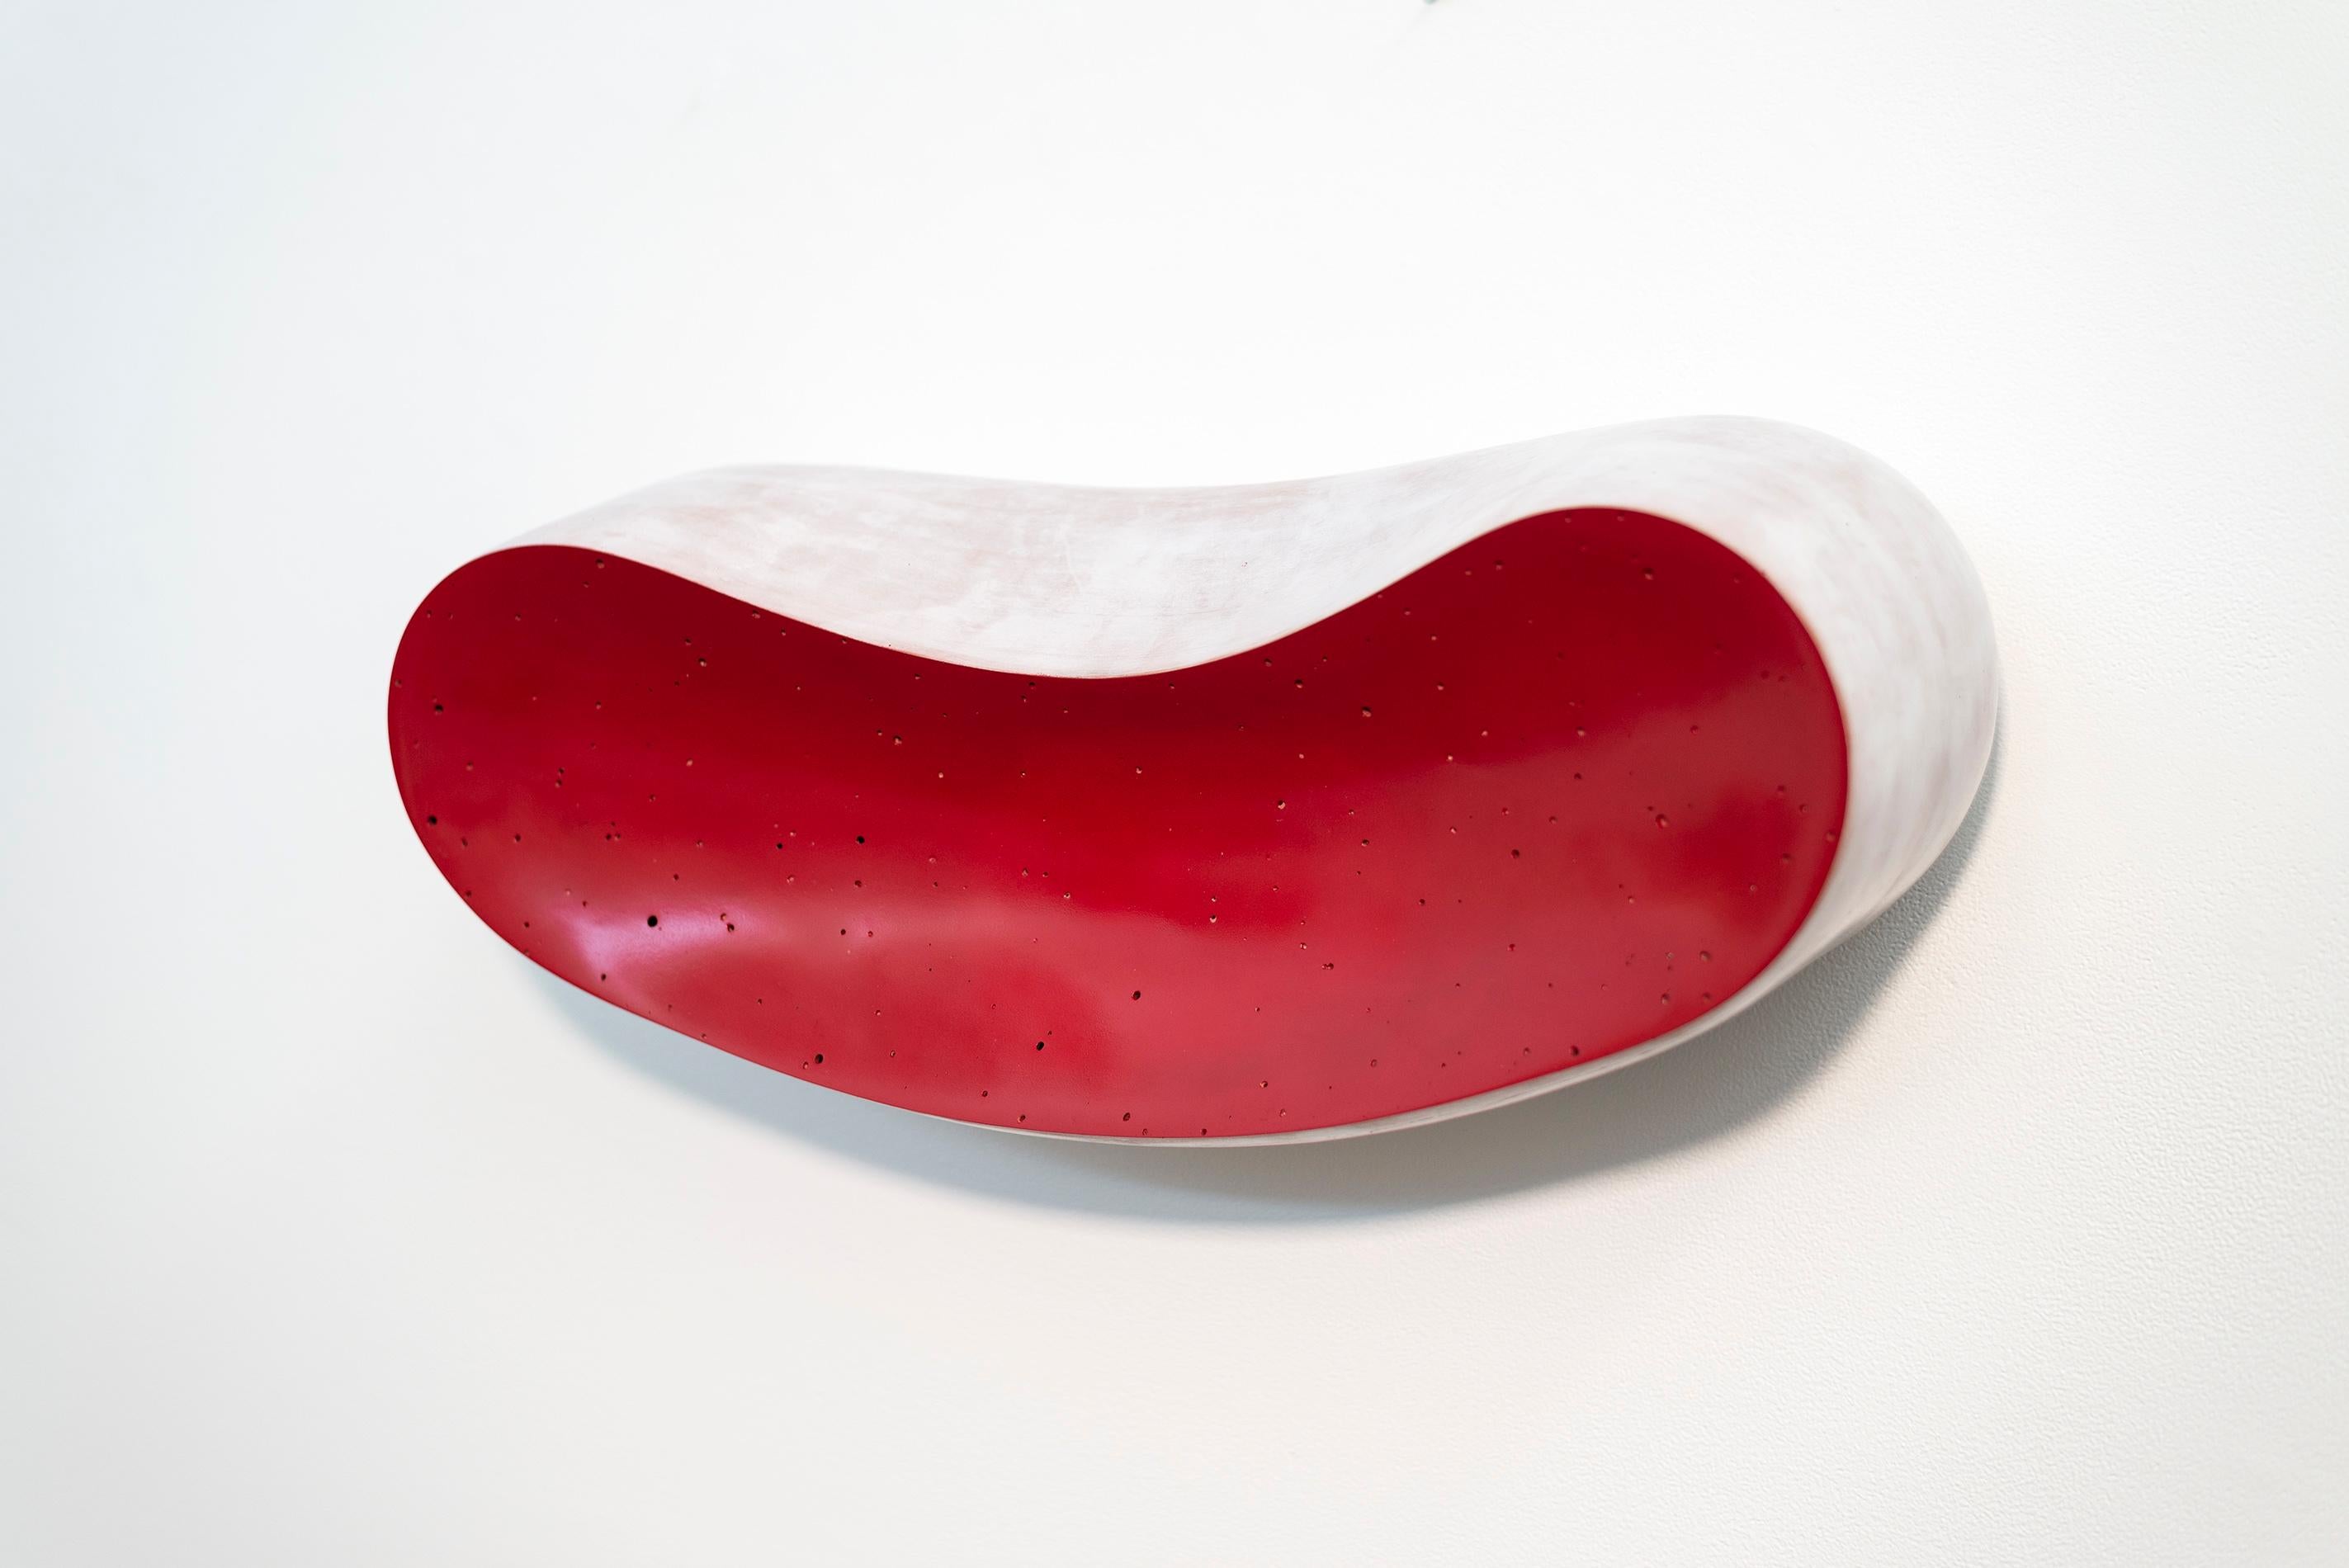 La Bouche - playful, red, white, abstract, elongated, ceramic wall sculpture - Sculpture by Steven Heinemann